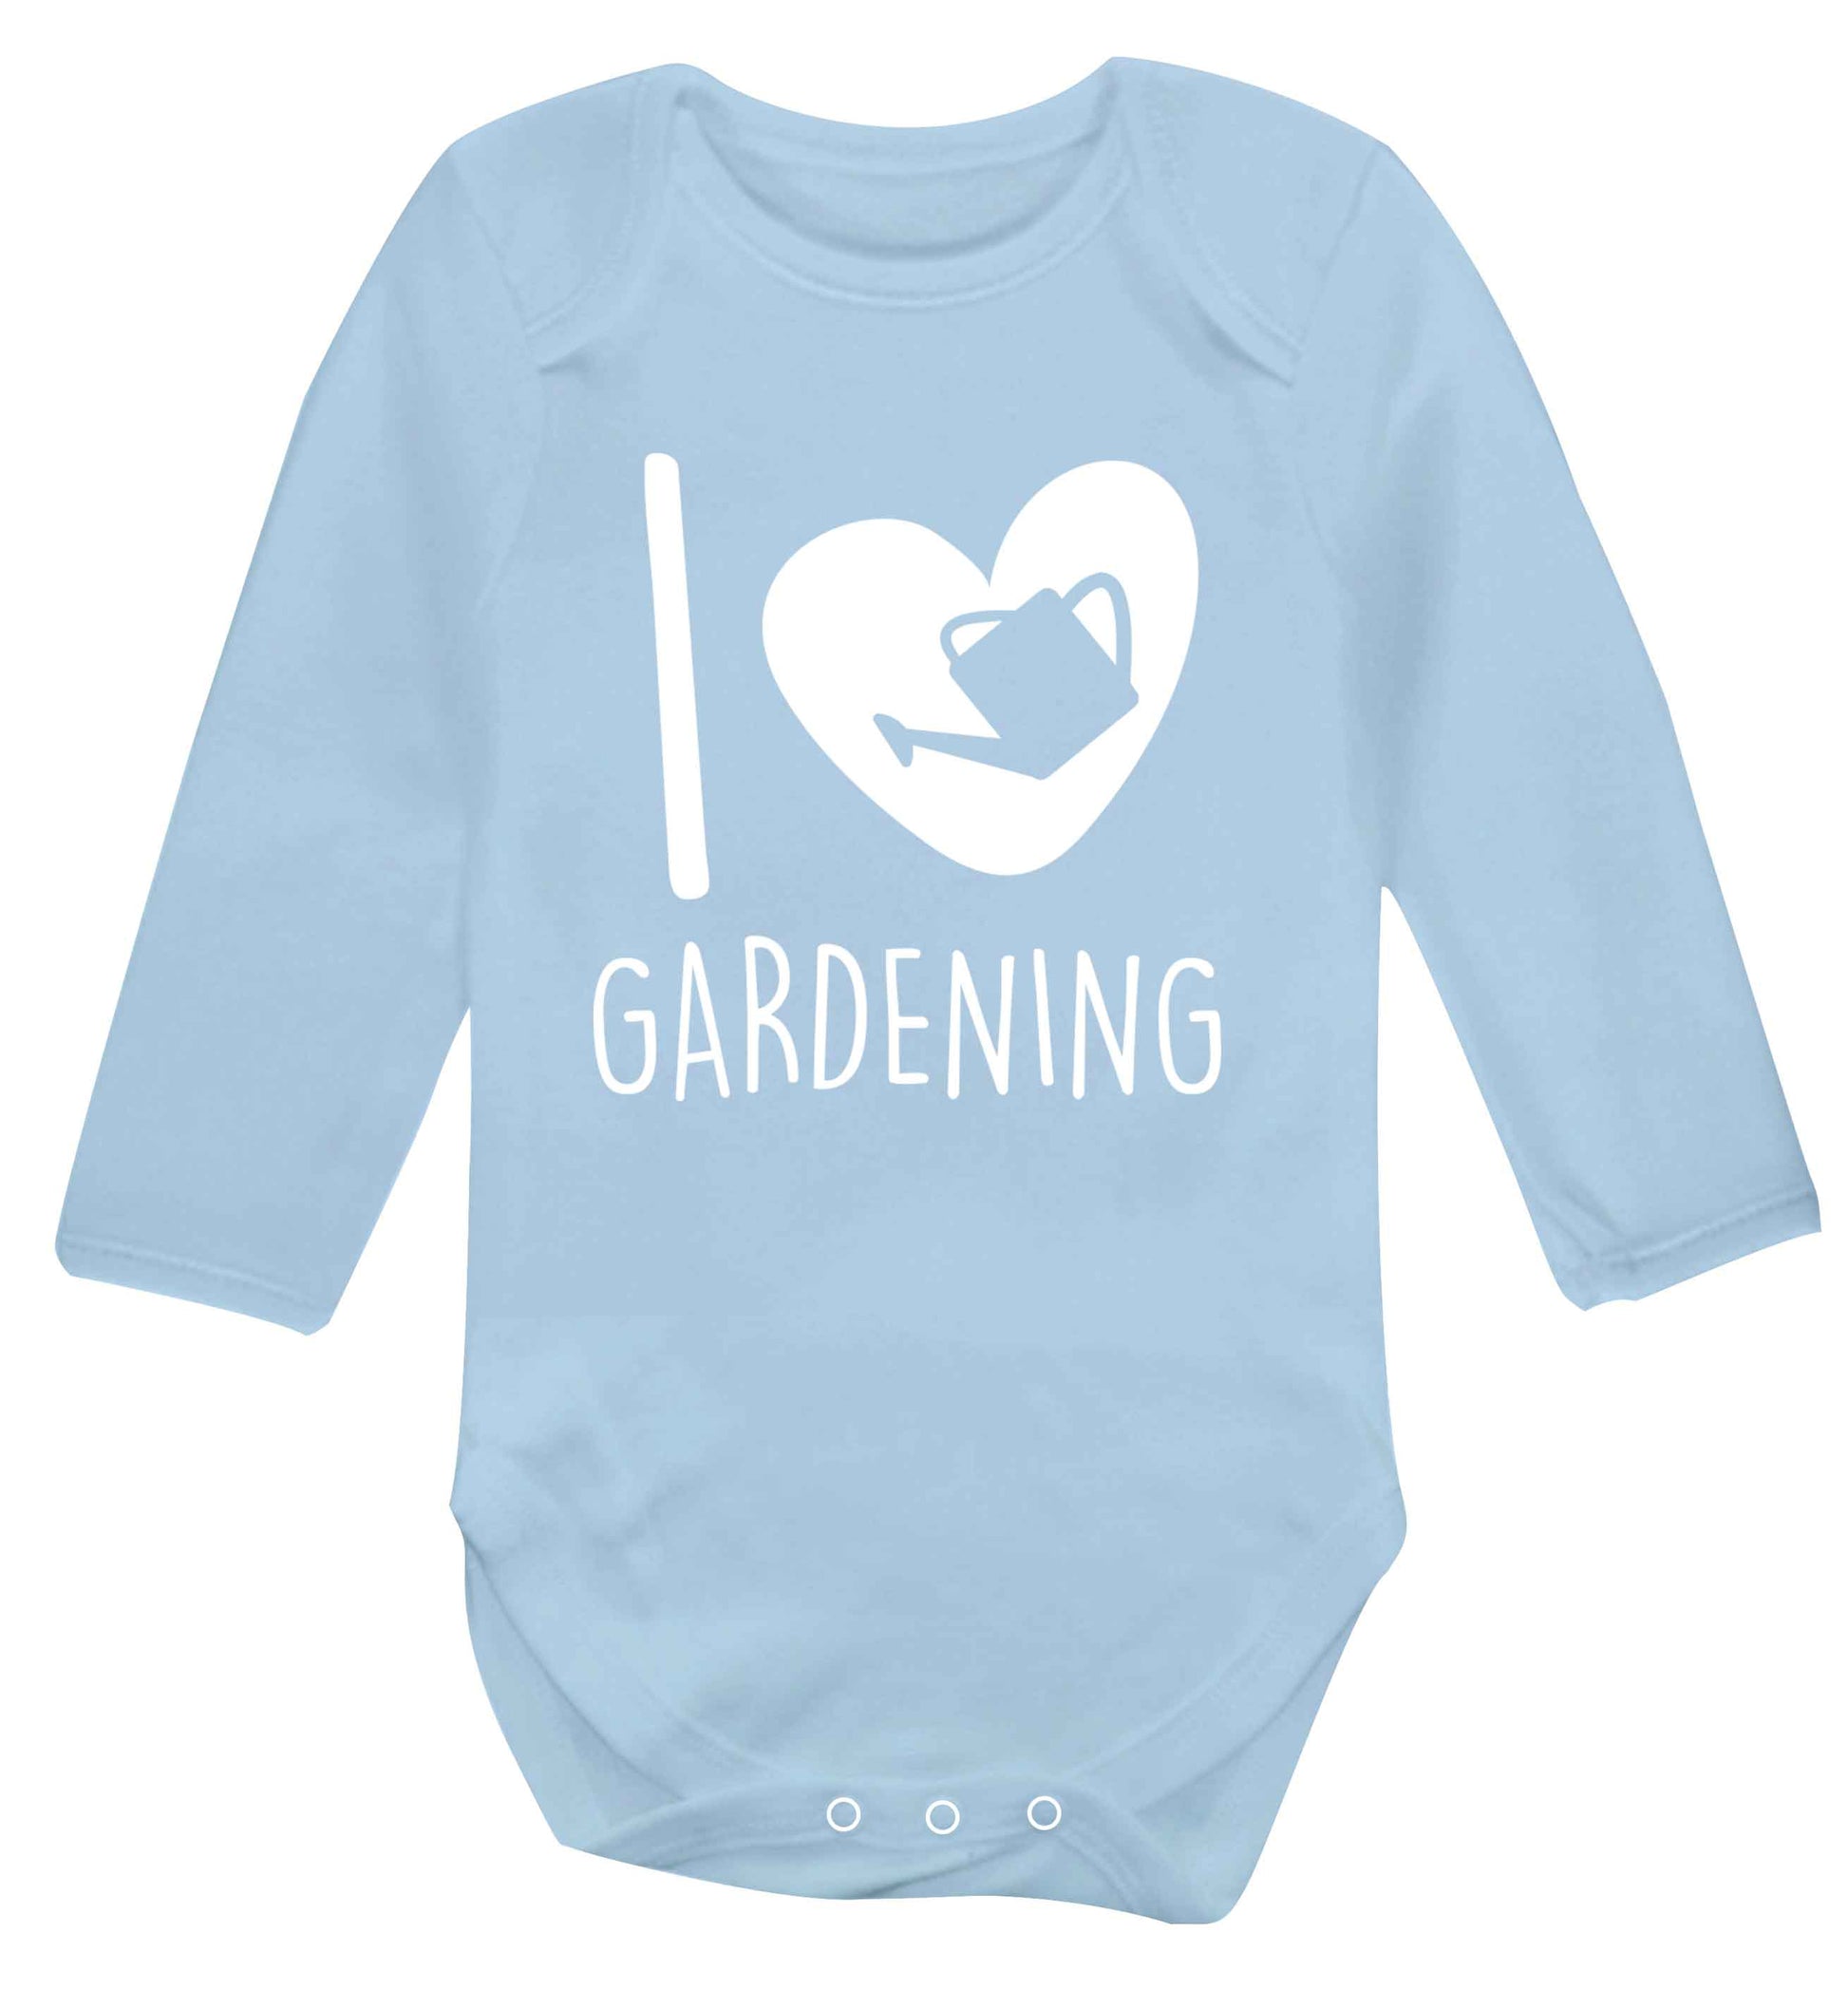 I love gardening Baby Vest long sleeved pale blue 6-12 months